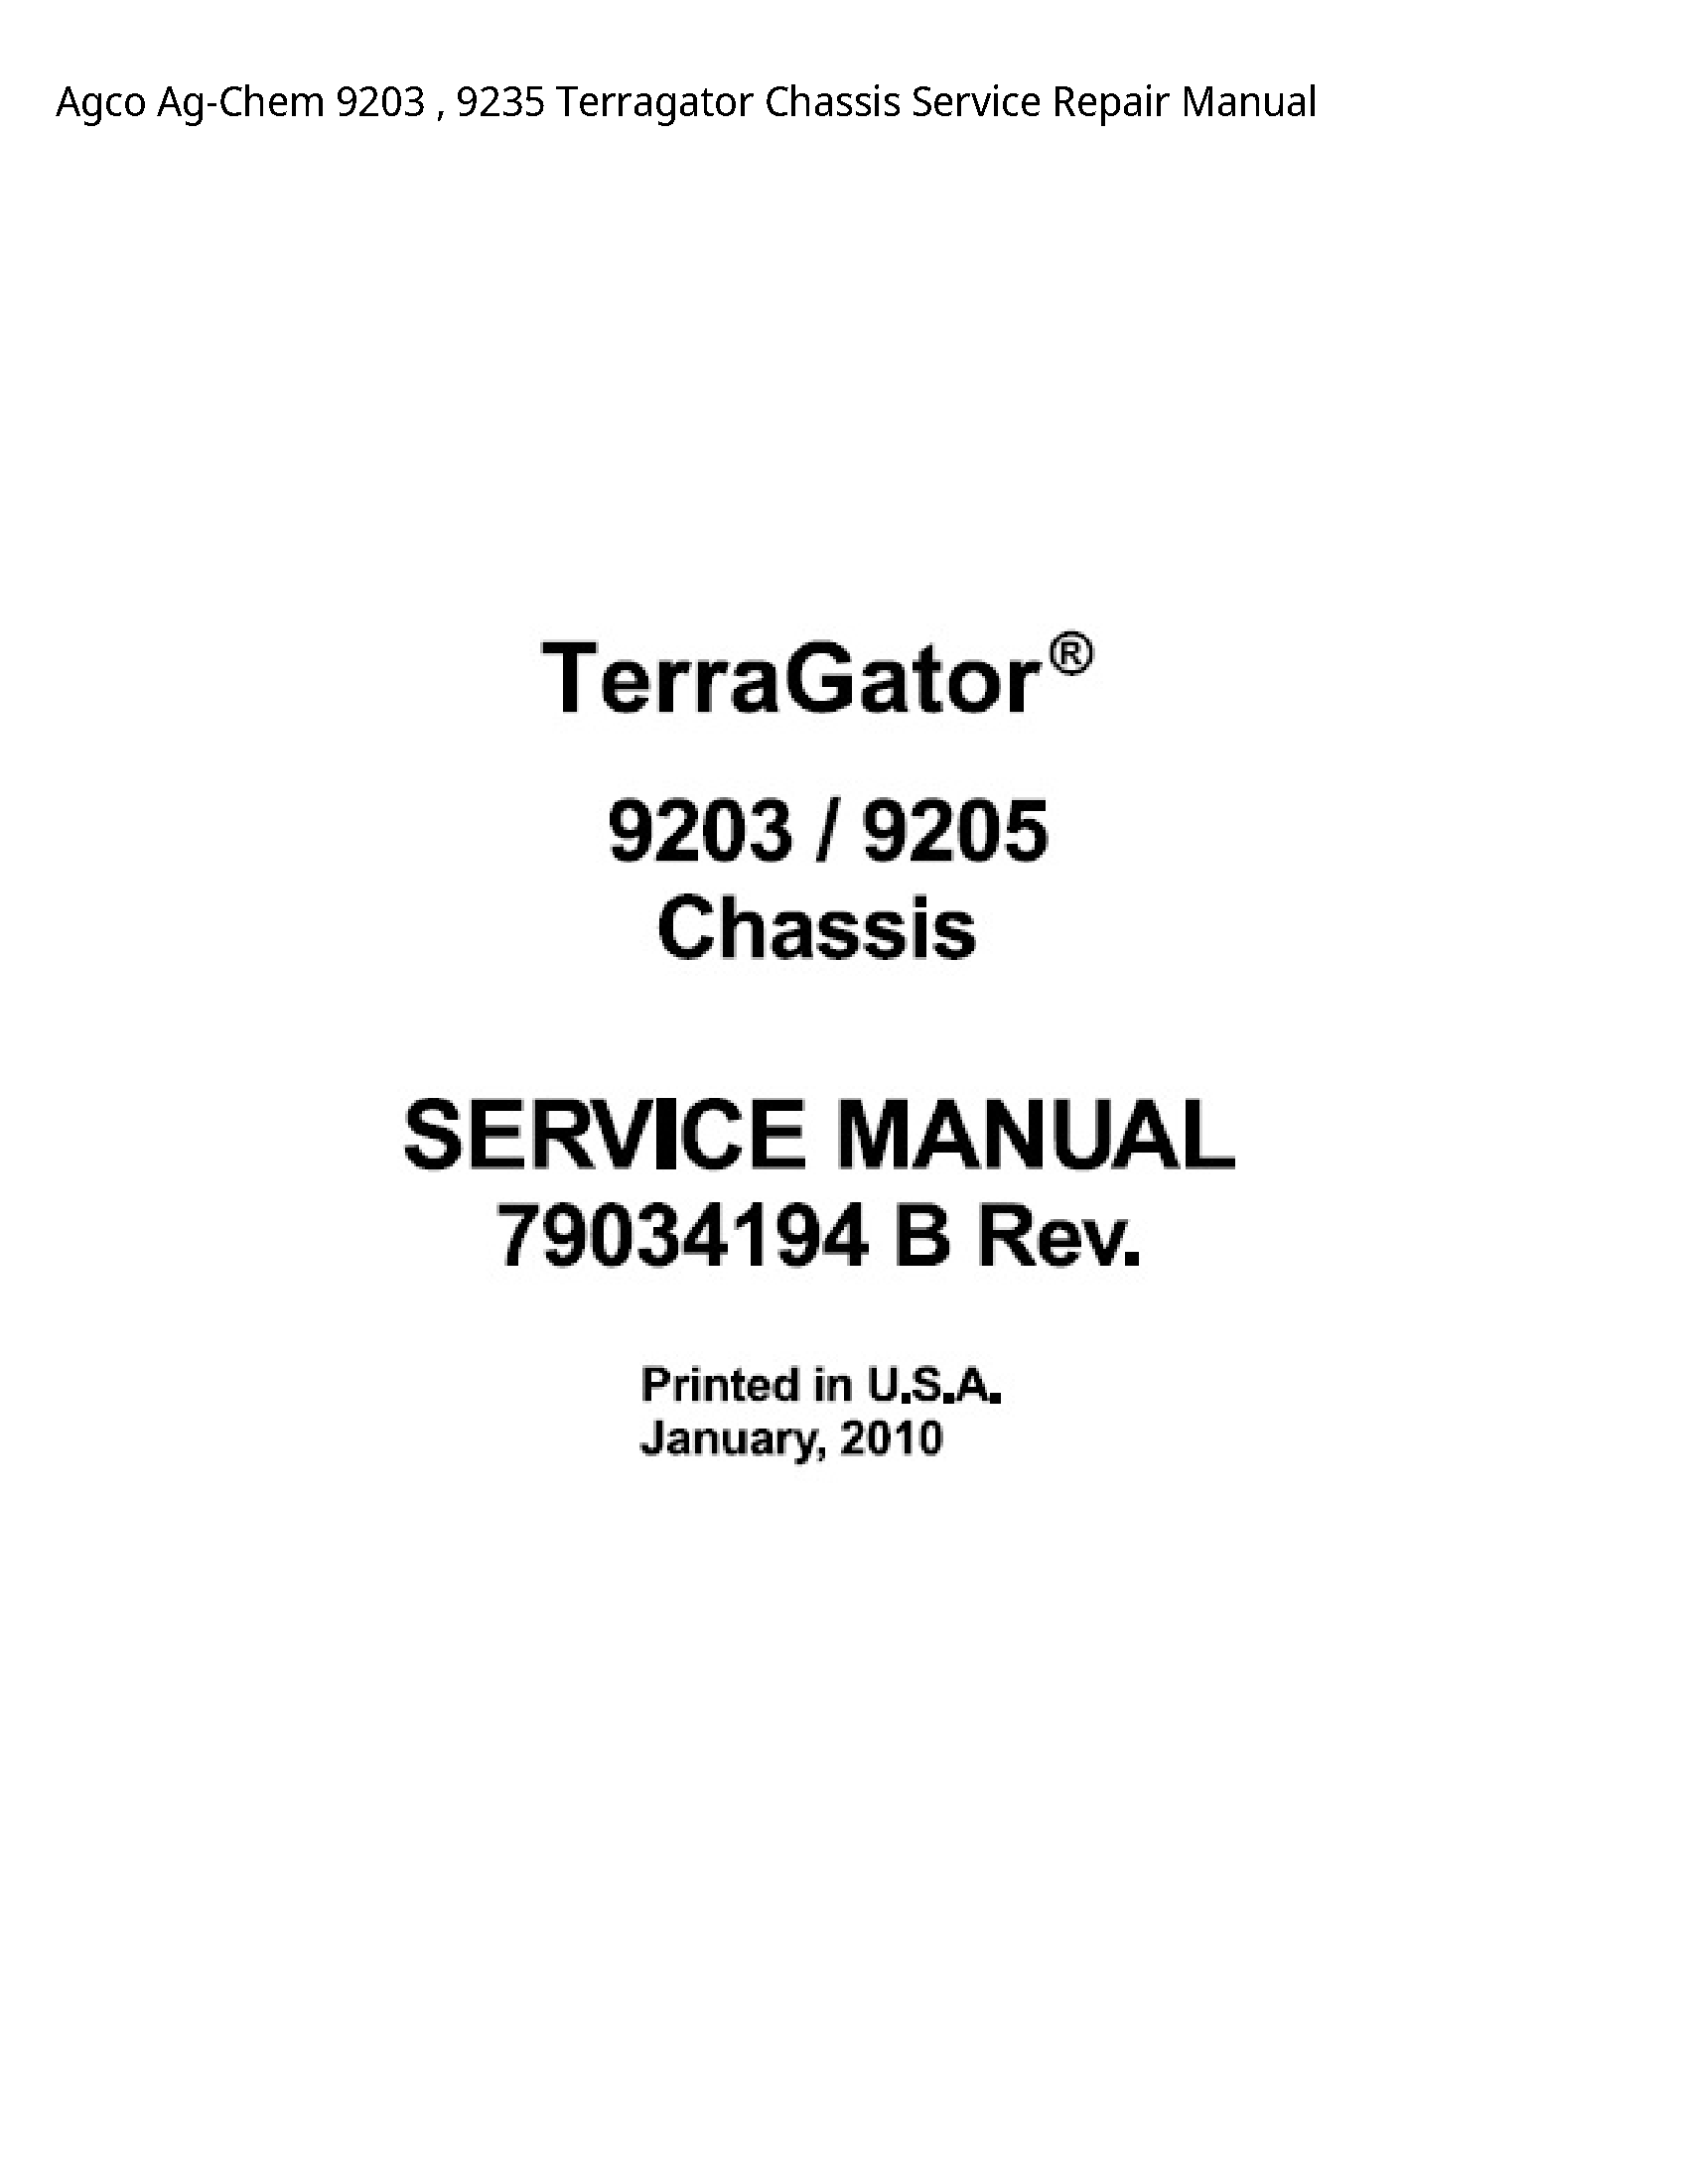 AGCO 9203 Ag-Chem Terragator Chassis manual